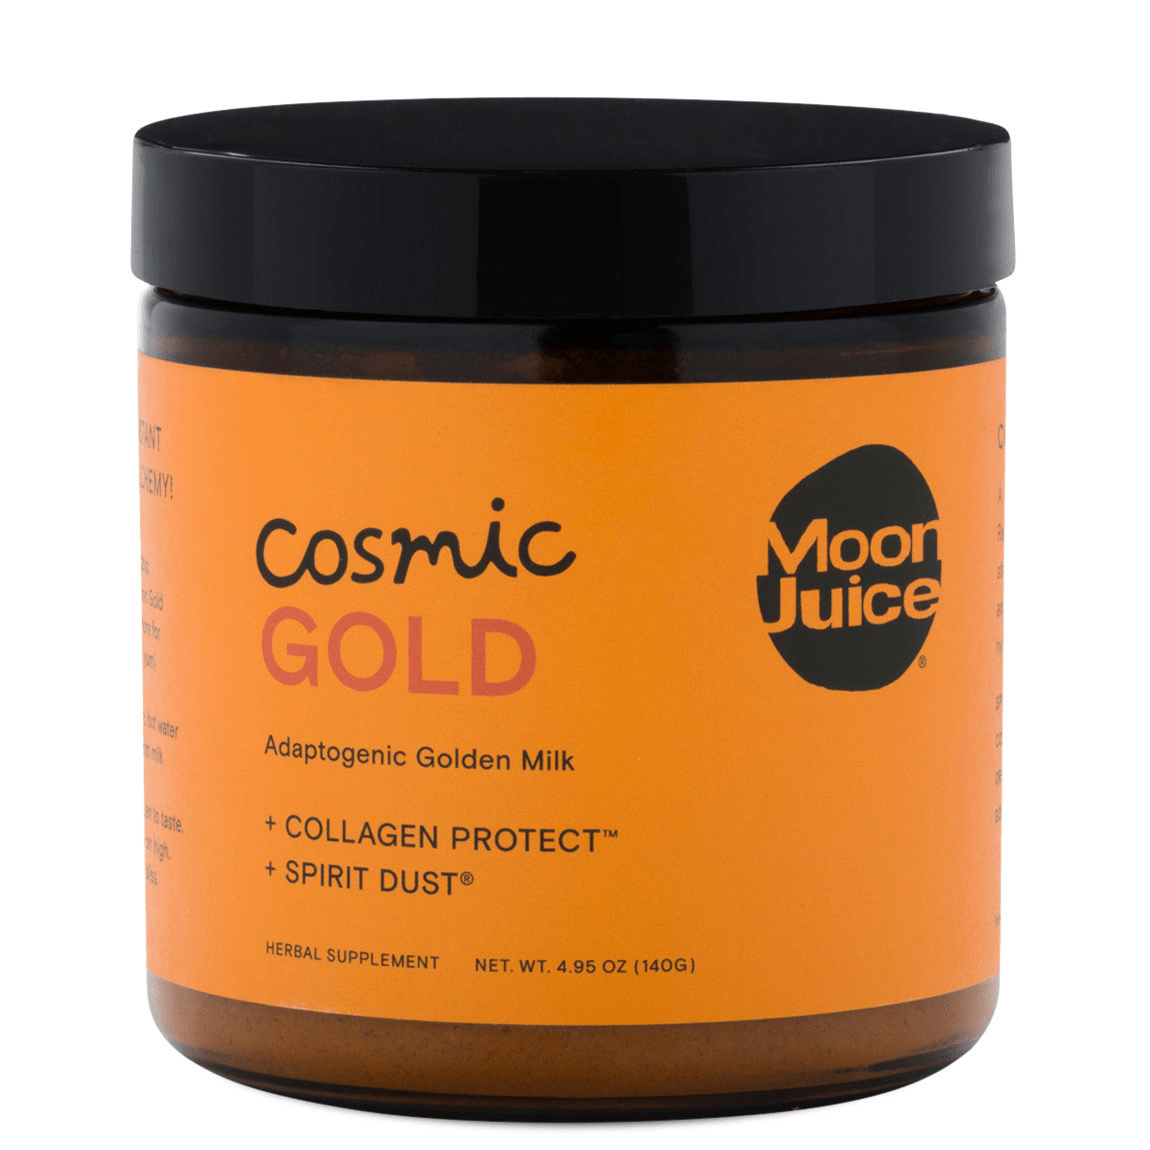 MOON JUICE Cosmic Gold, 4.95 oz |140 g, Supplements, London Loves Beauty